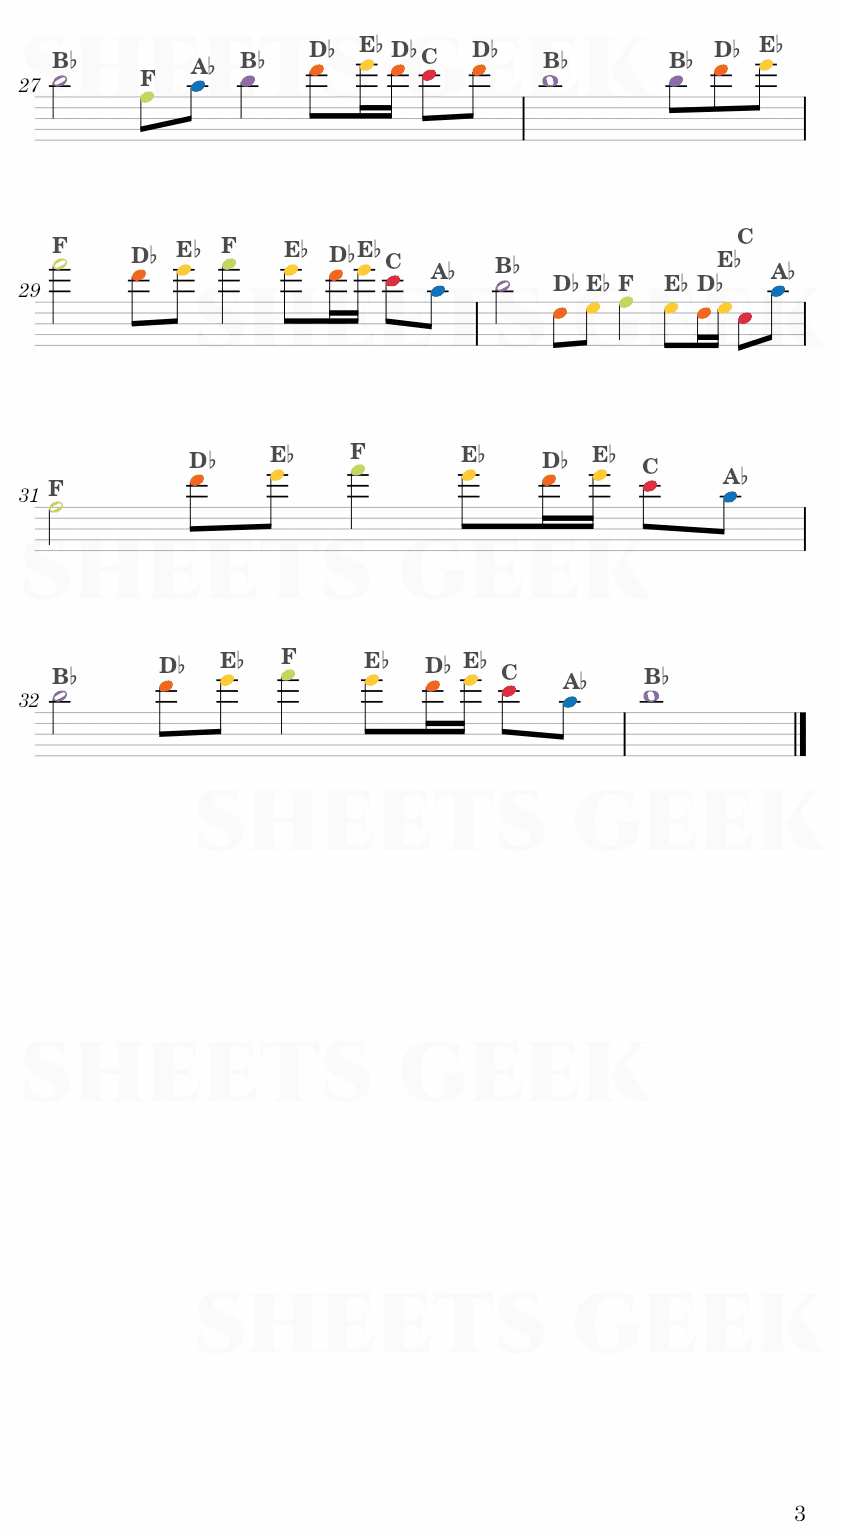 Heartache - Undertale Easy Sheets Music Free for piano, keyboard, flute, violin, sax, celllo 3